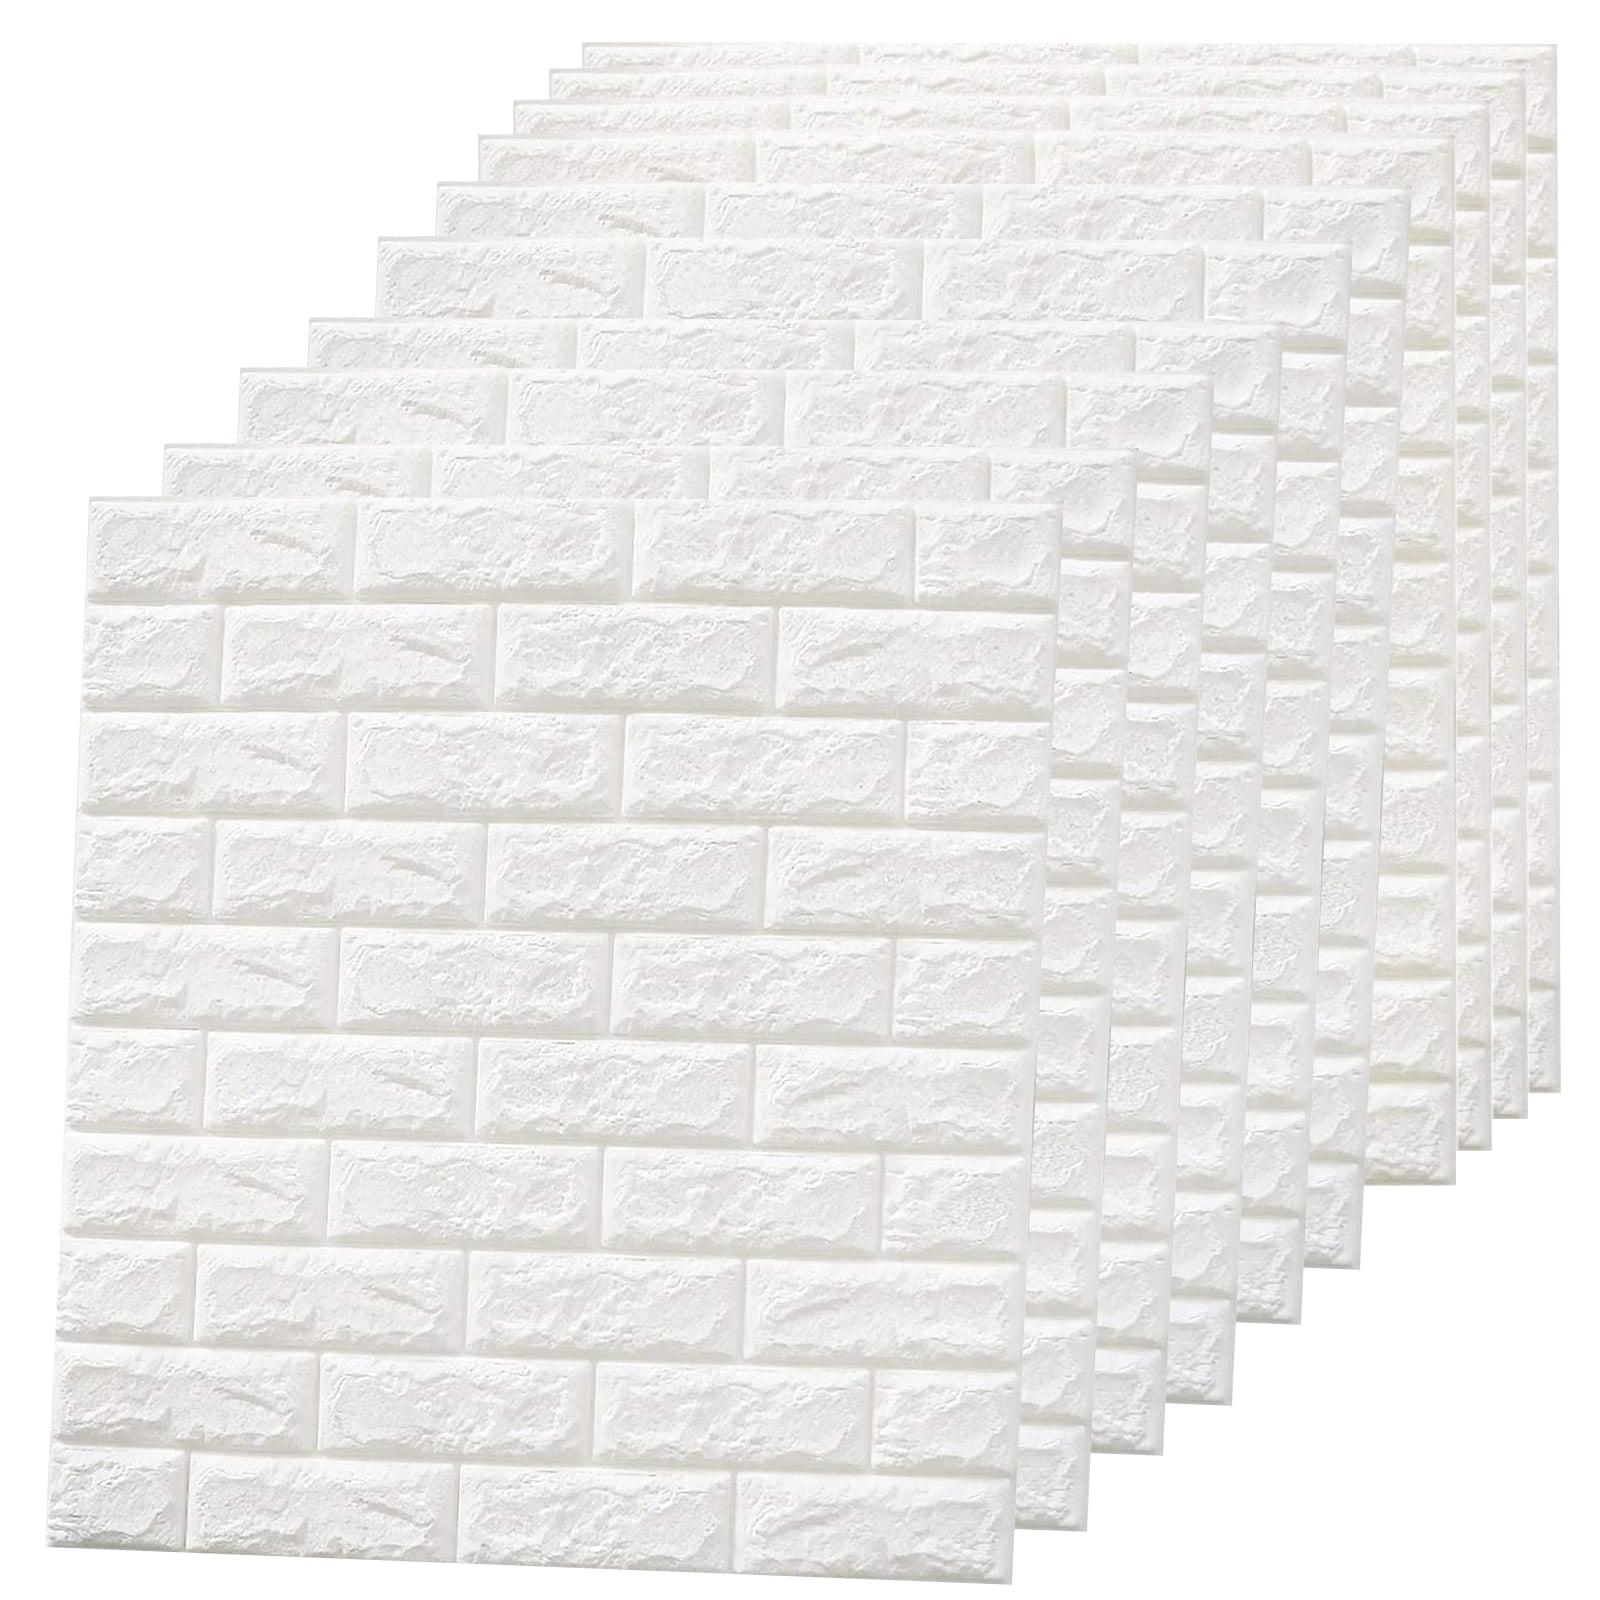 70×77cm 3D Tile Brick Wall Stickers Self-adhesive Wallpaper Foam Panel 10 Pcs 